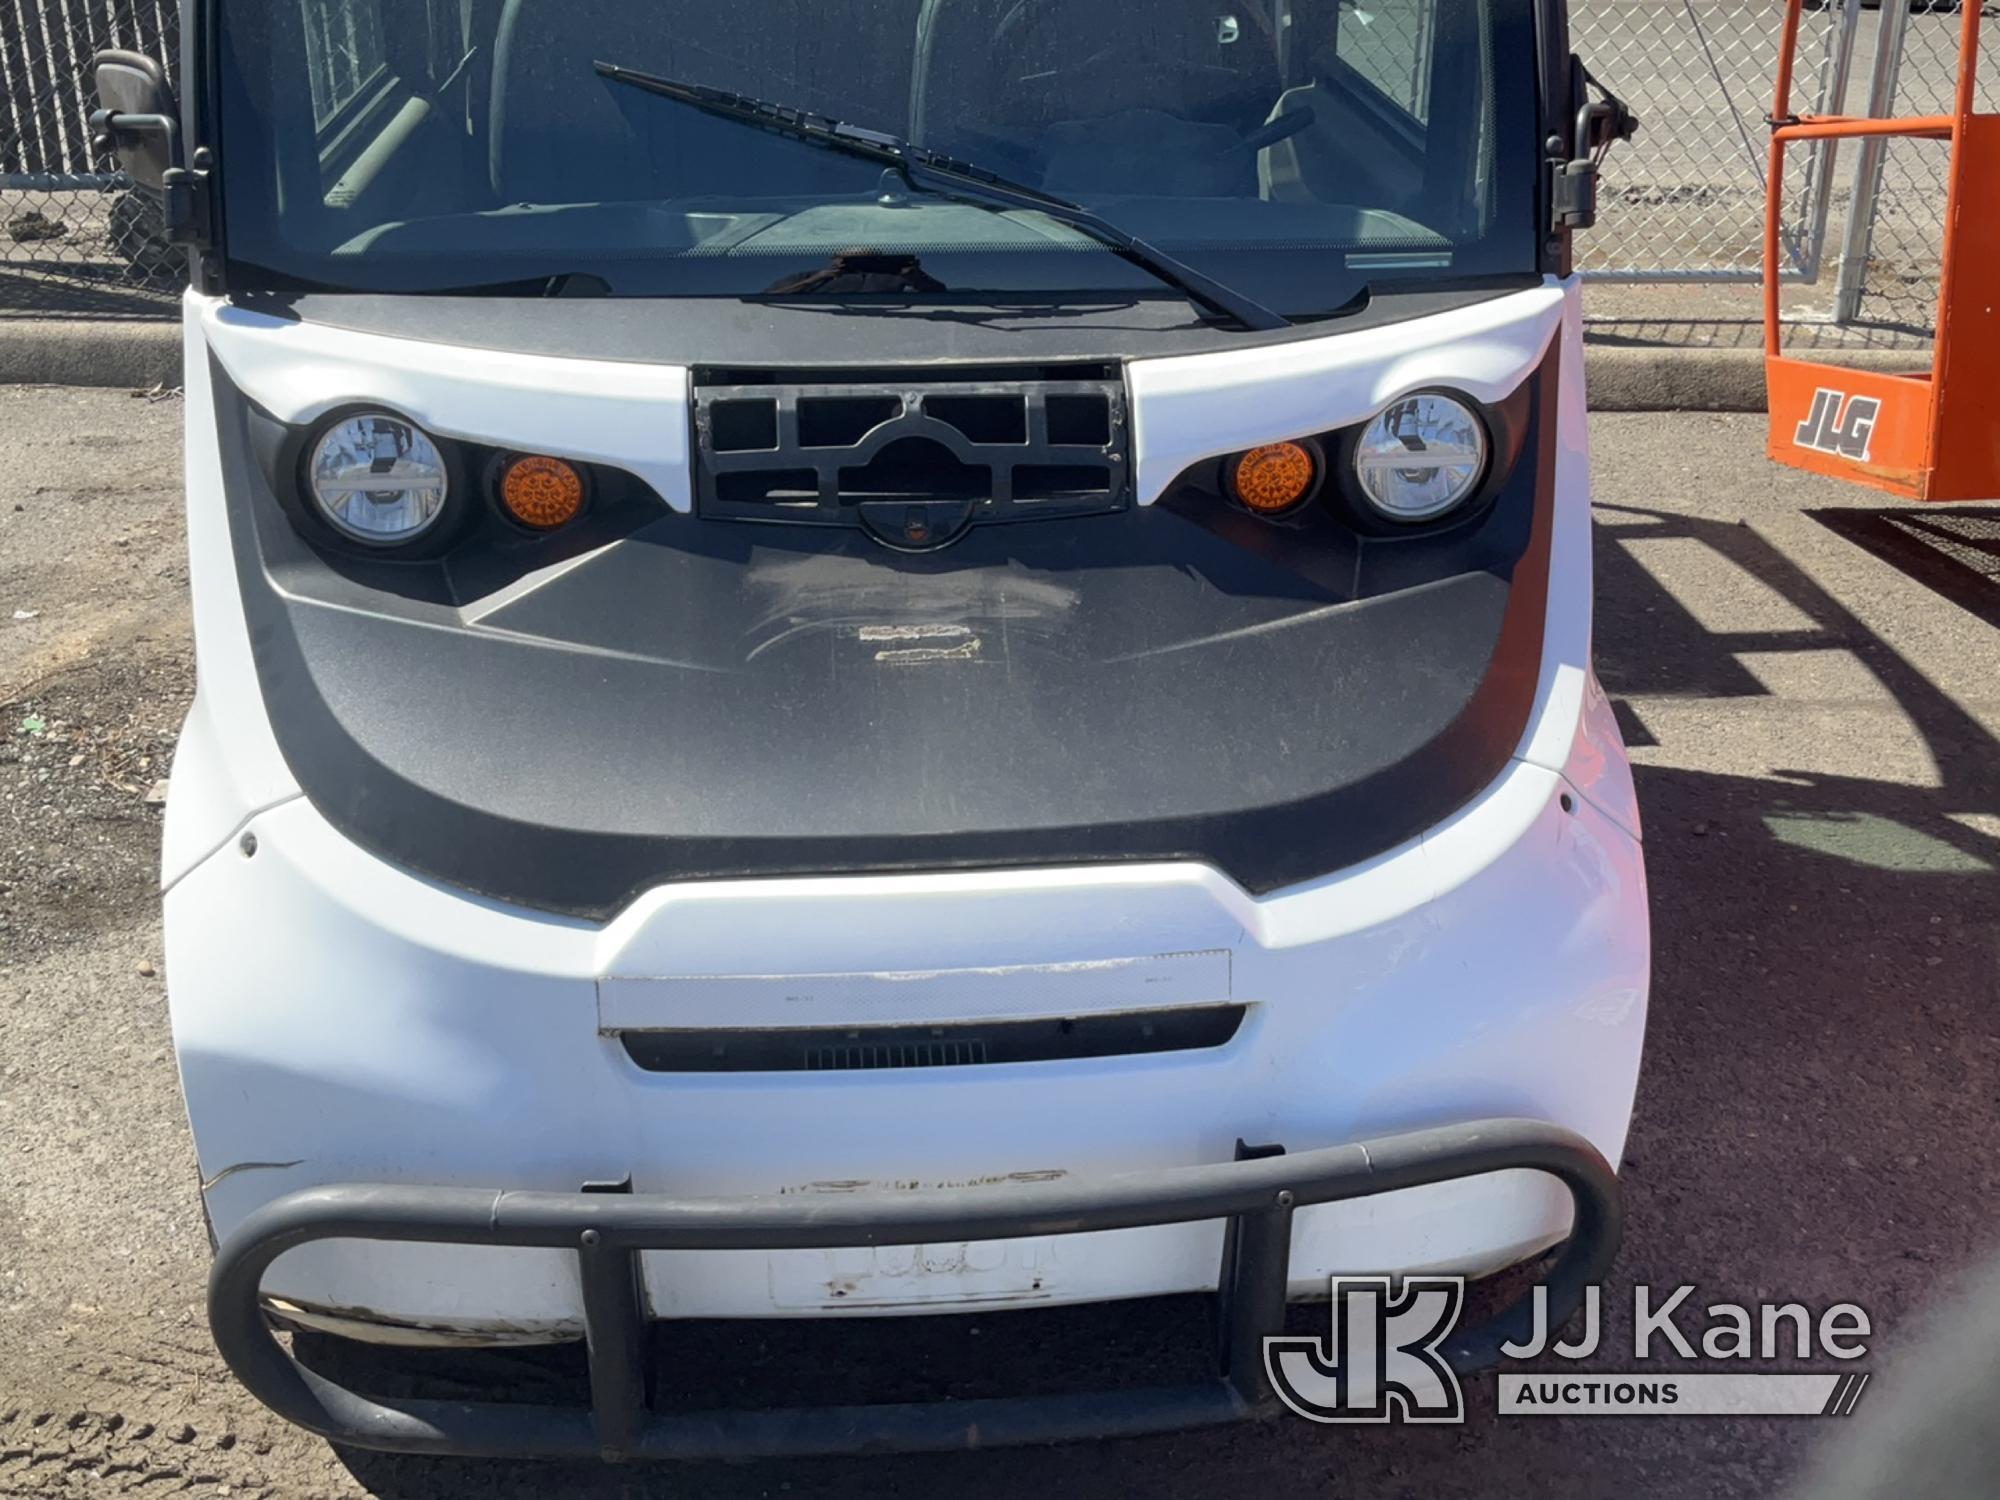 (Portland, OR) 2017 Polaris Gem EL-XD 4X2 E Yard Cart Not Running, Condition Unknown, Has Power But